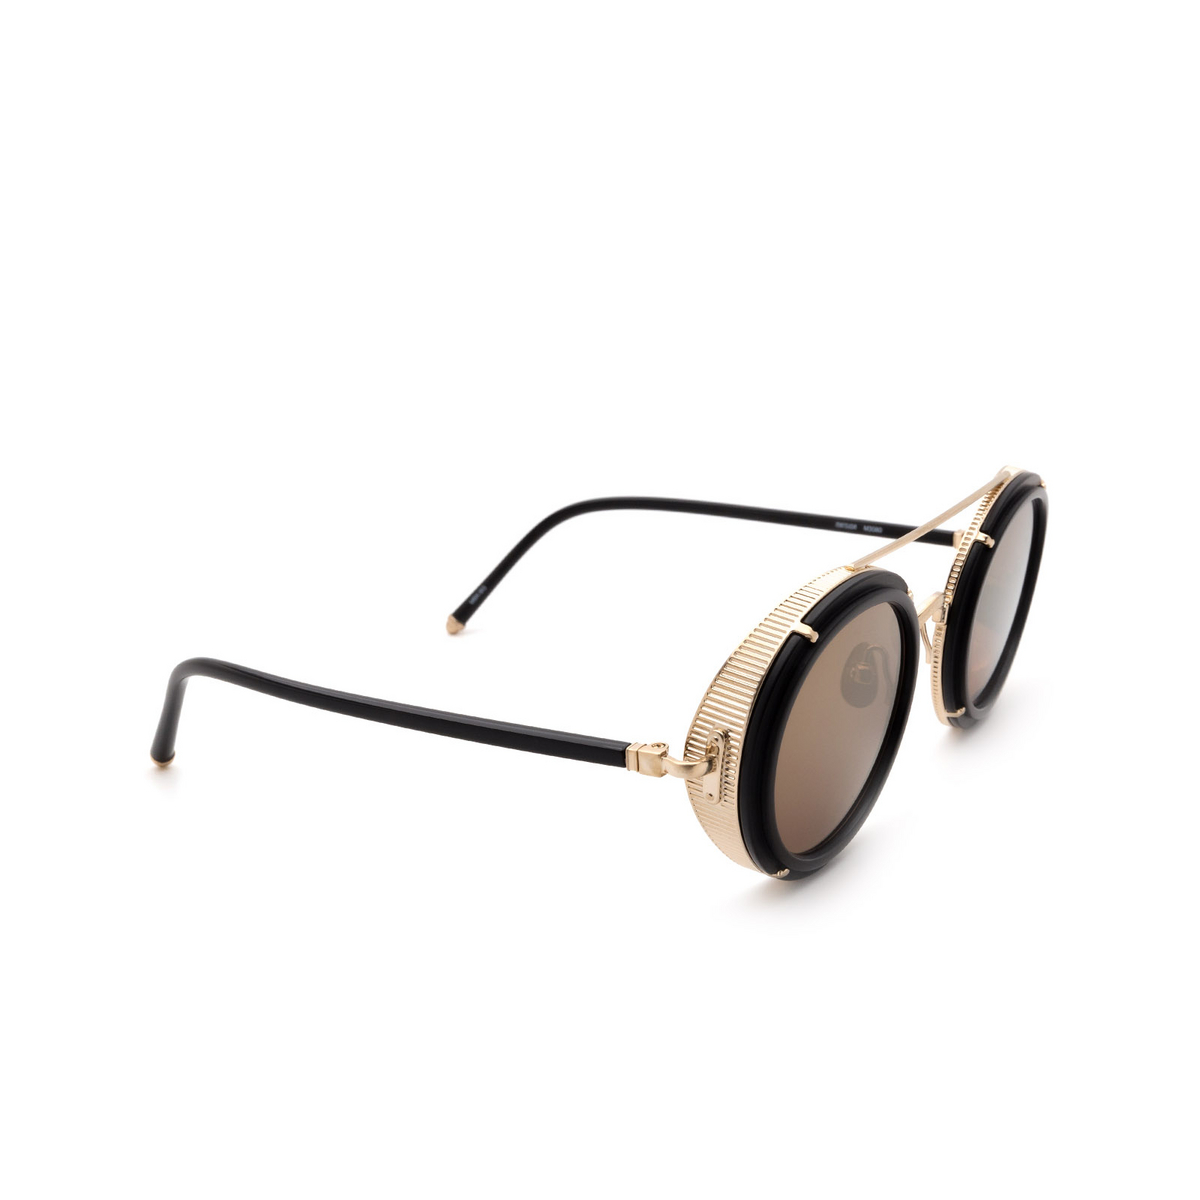 Matsuda® Round Sunglasses: M3080 color Matte Black / Brushed Gold Mbk-bg - three-quarters view.